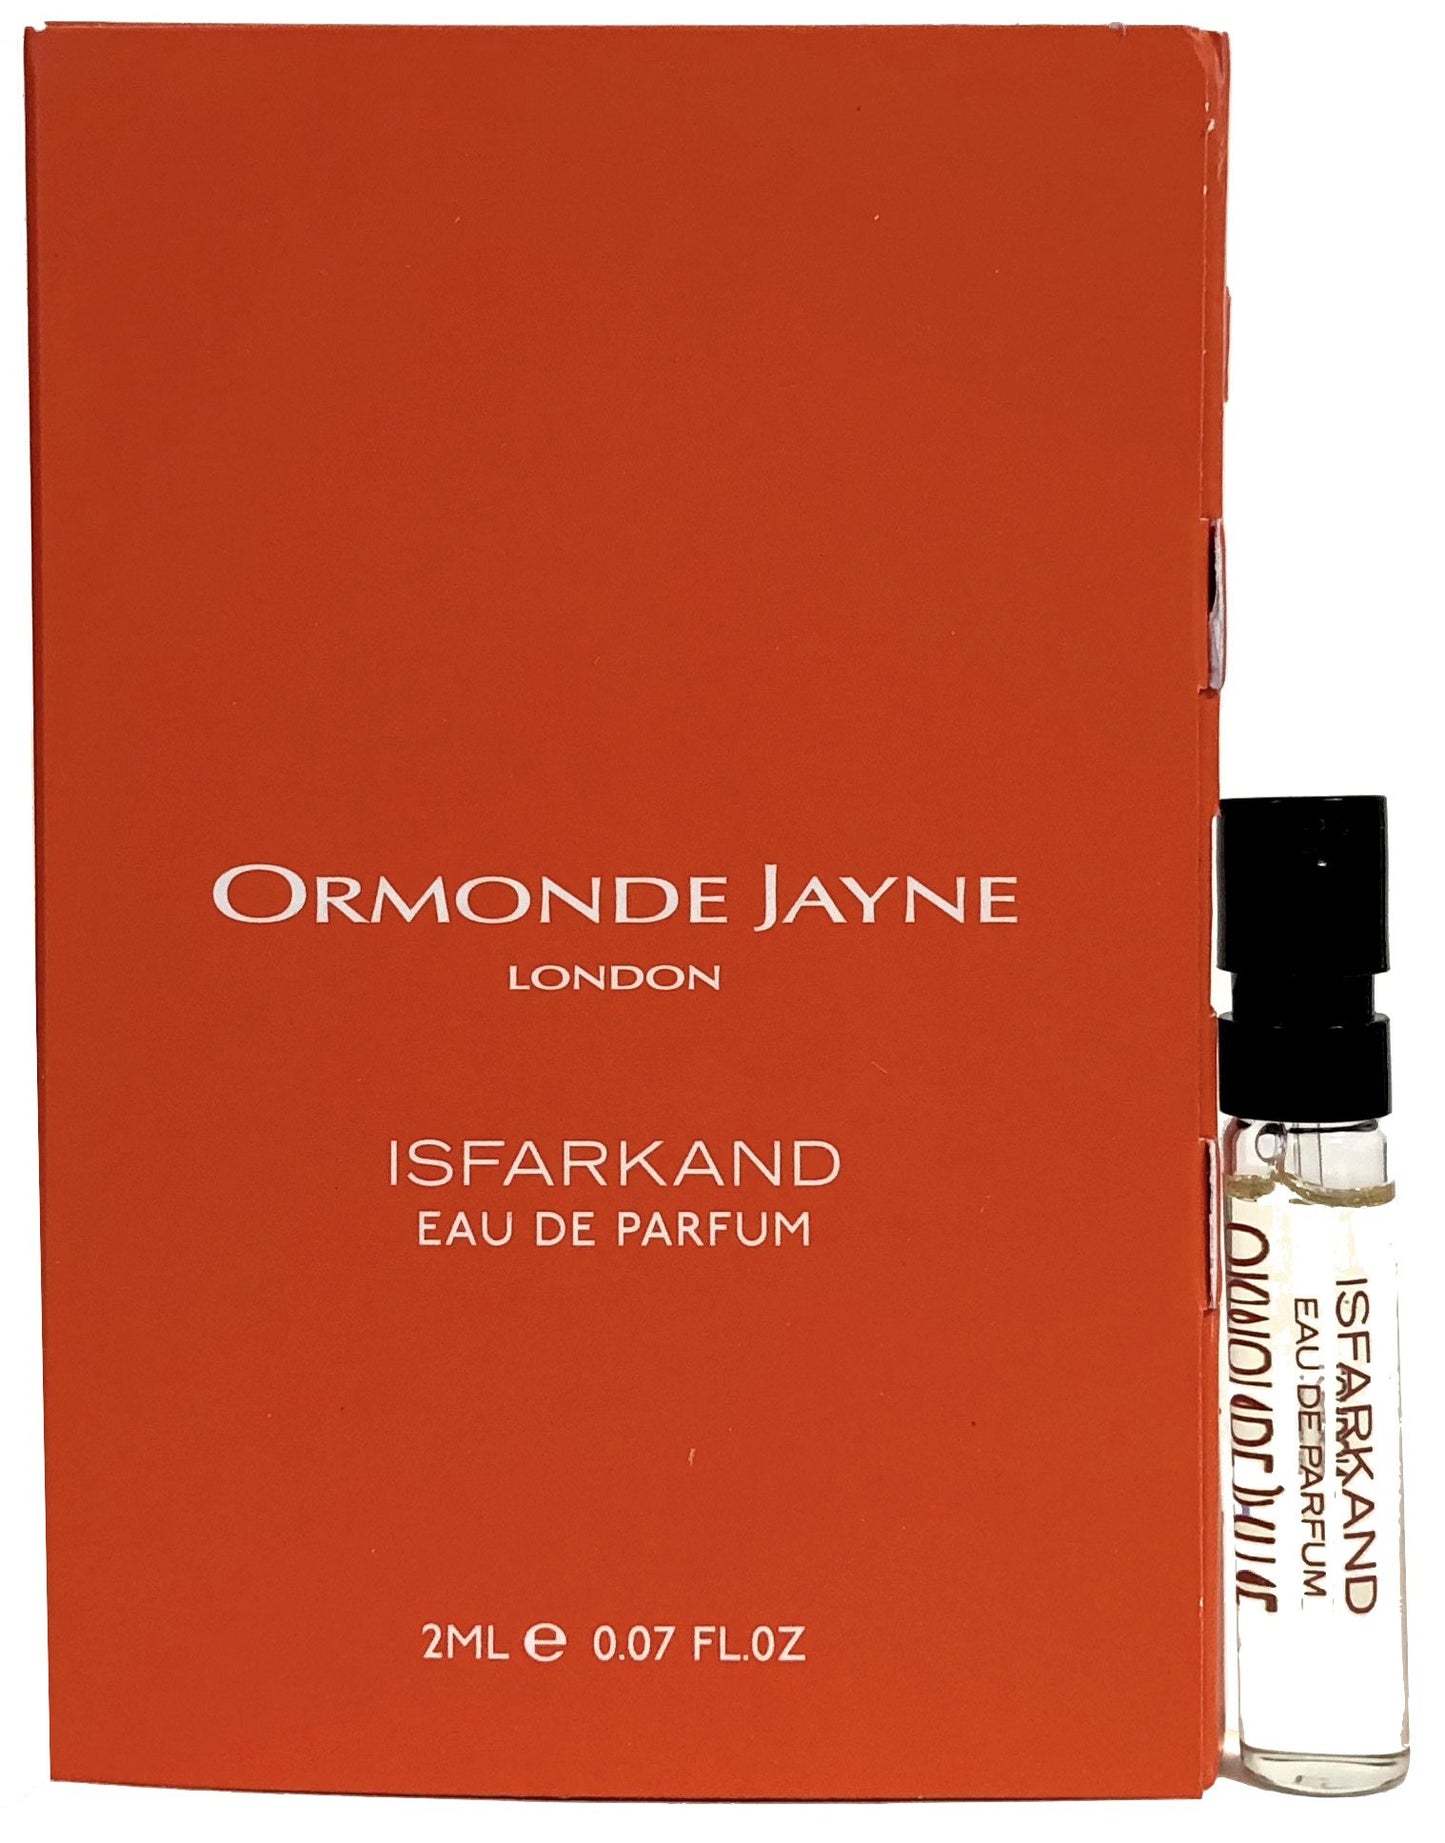 Oficjalne próbki perfum Ormonde Jayne Isfarkand 2 ml